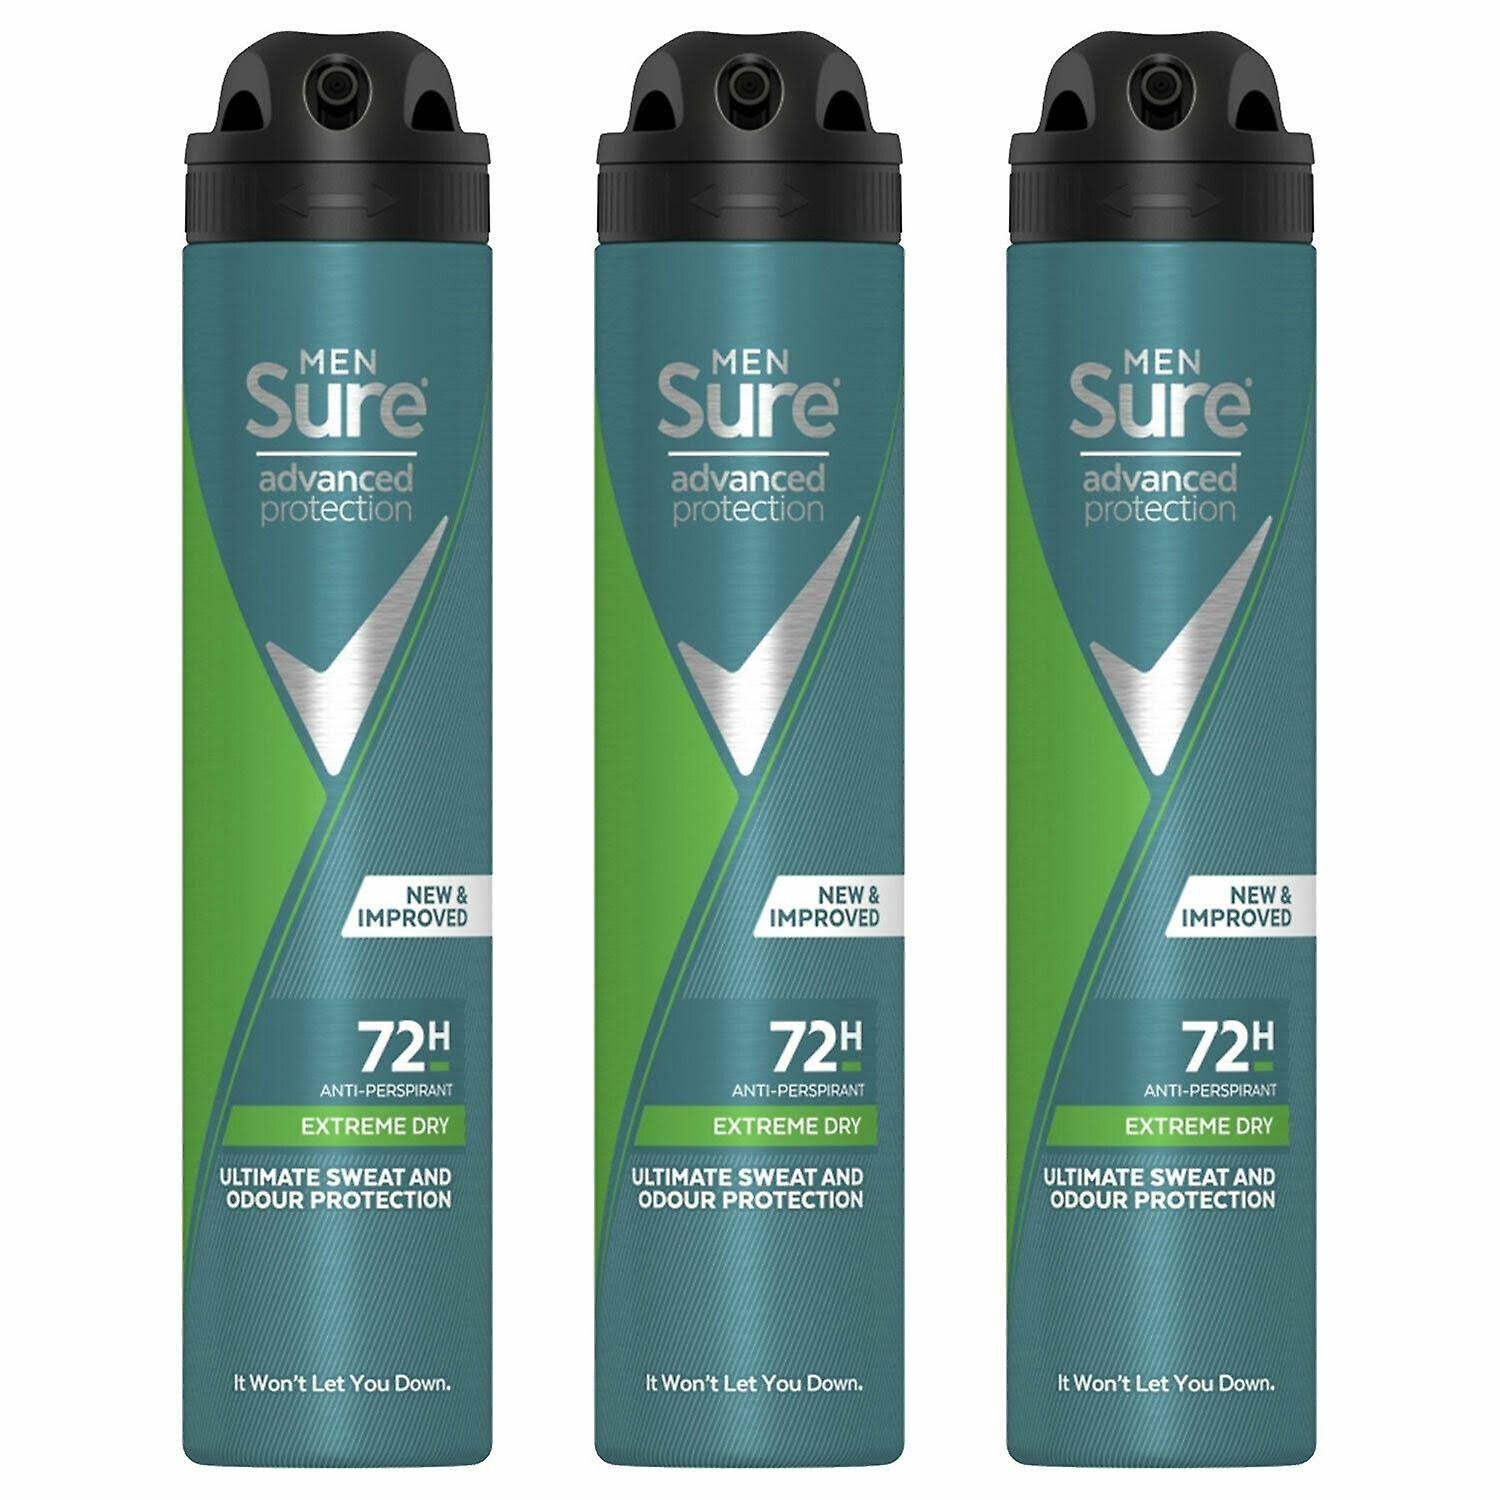 Sure Advanced Protection Extreme Dry Anti-Perspirant Deodorant - 200ml